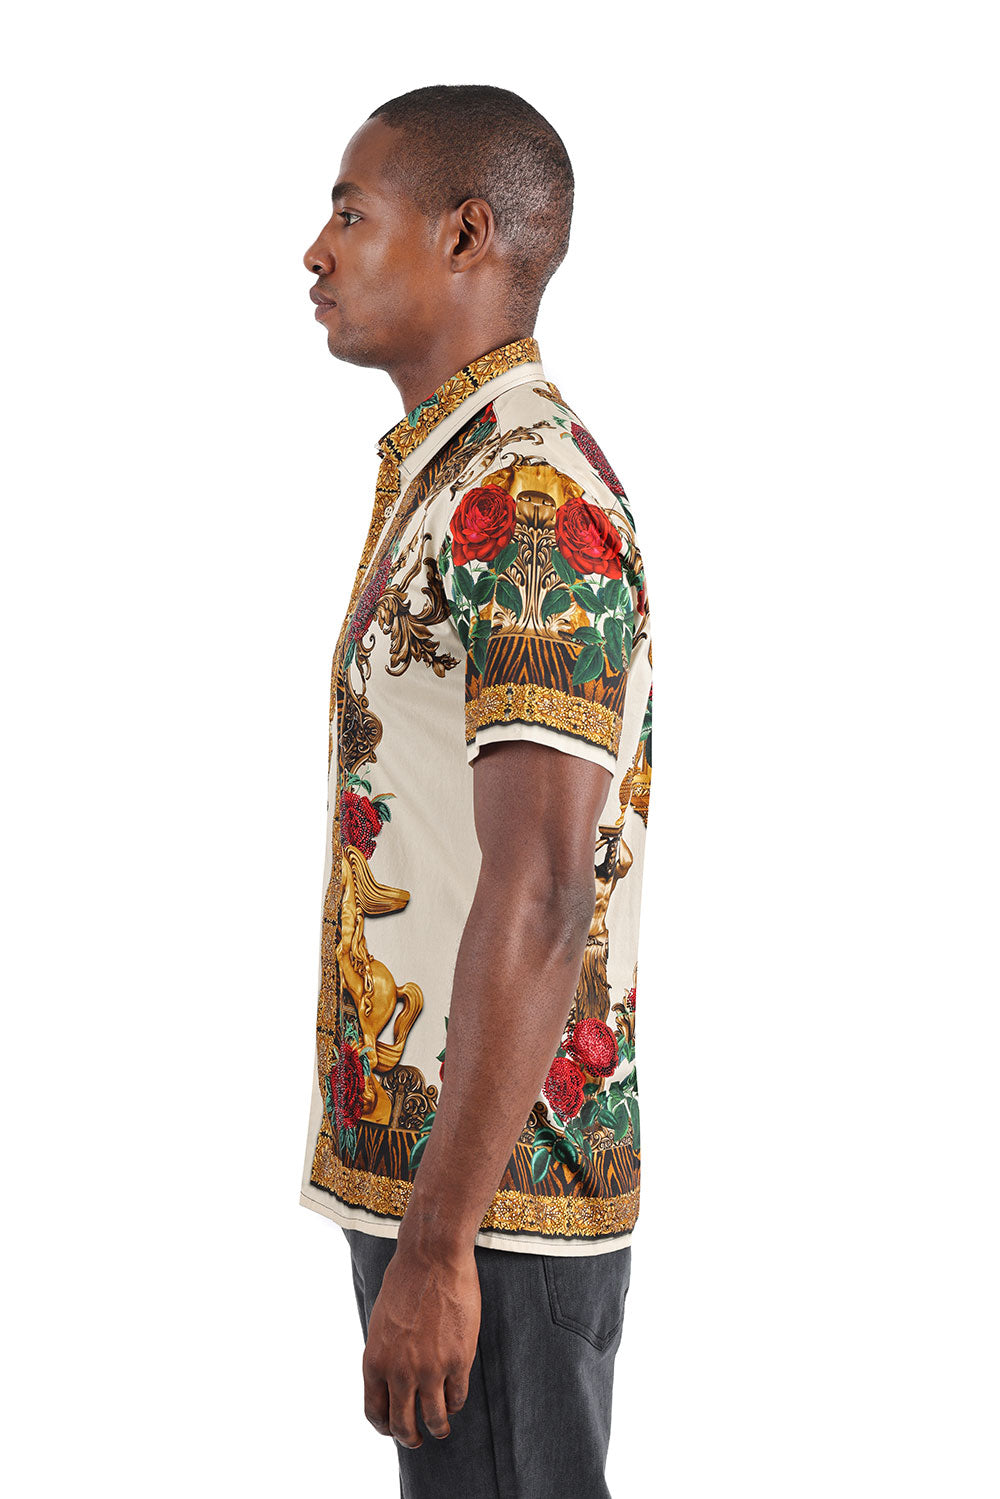 BARABAS Men's Leopard and Rhinestone Floral Short Sleeve Shirts 3SR418 Cream